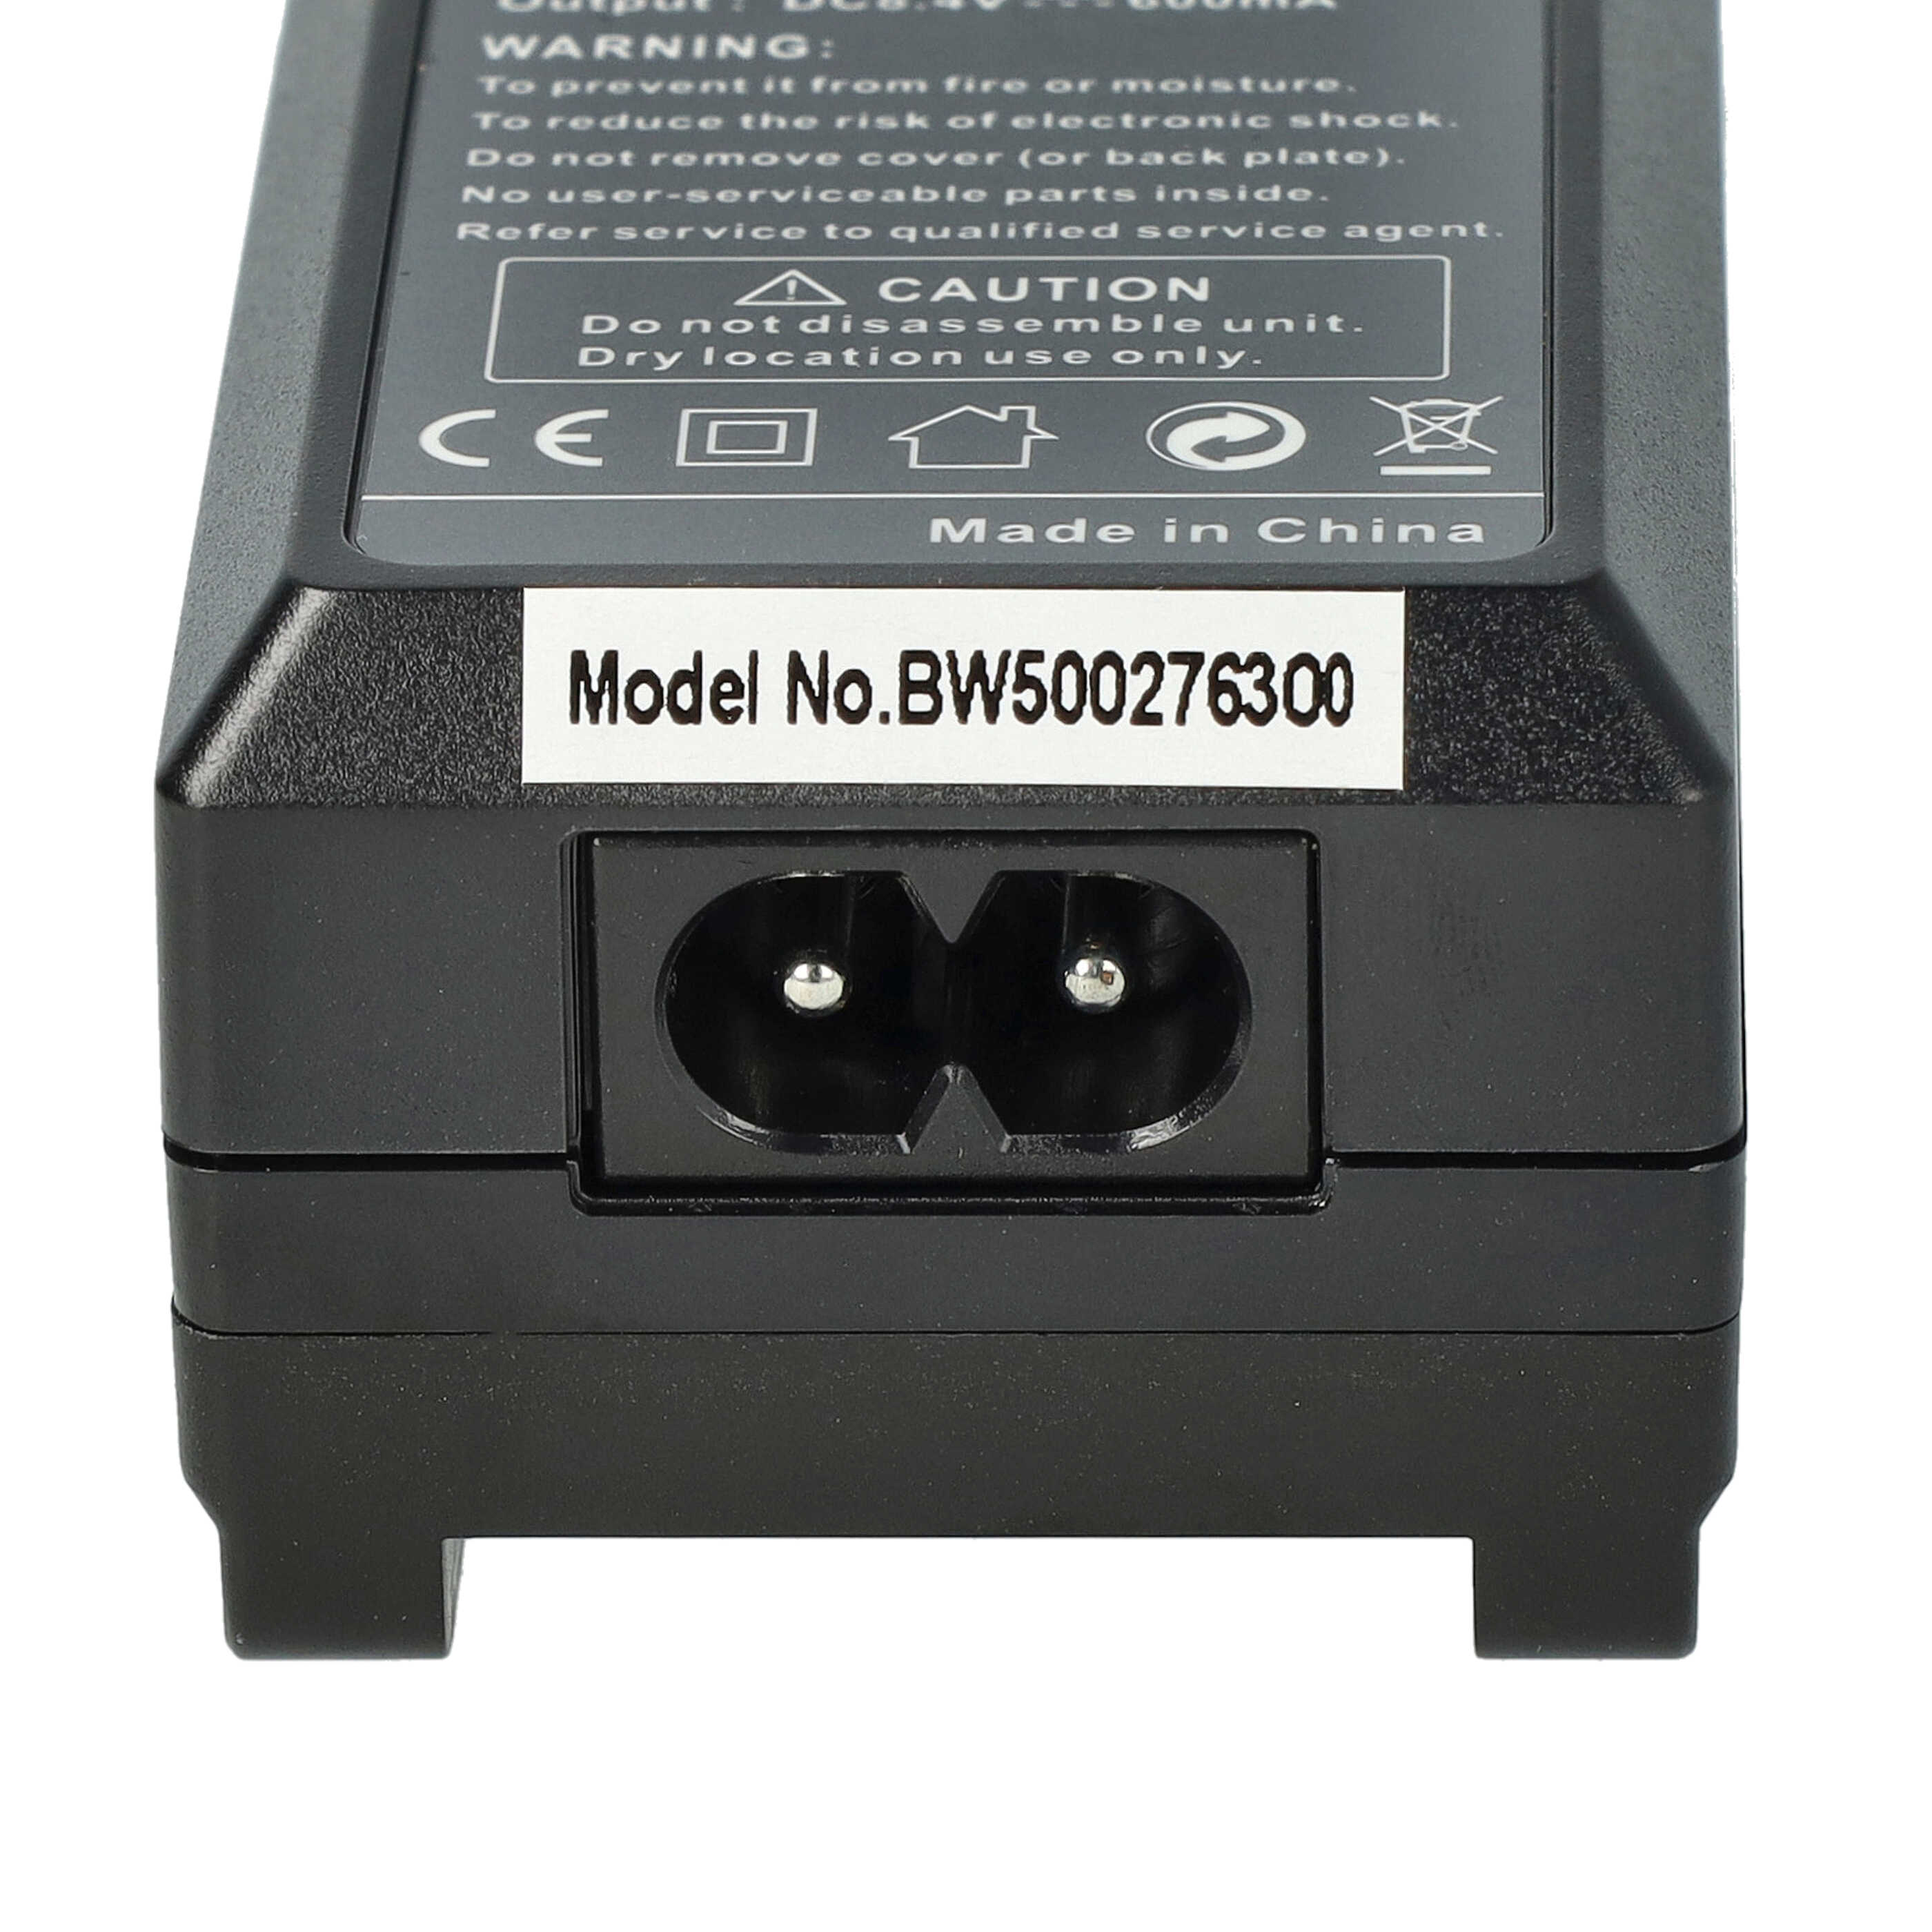 Battery Charger suitable for Samsung SB-LSM160 Camera etc. - 0.6 A, 8.4 V